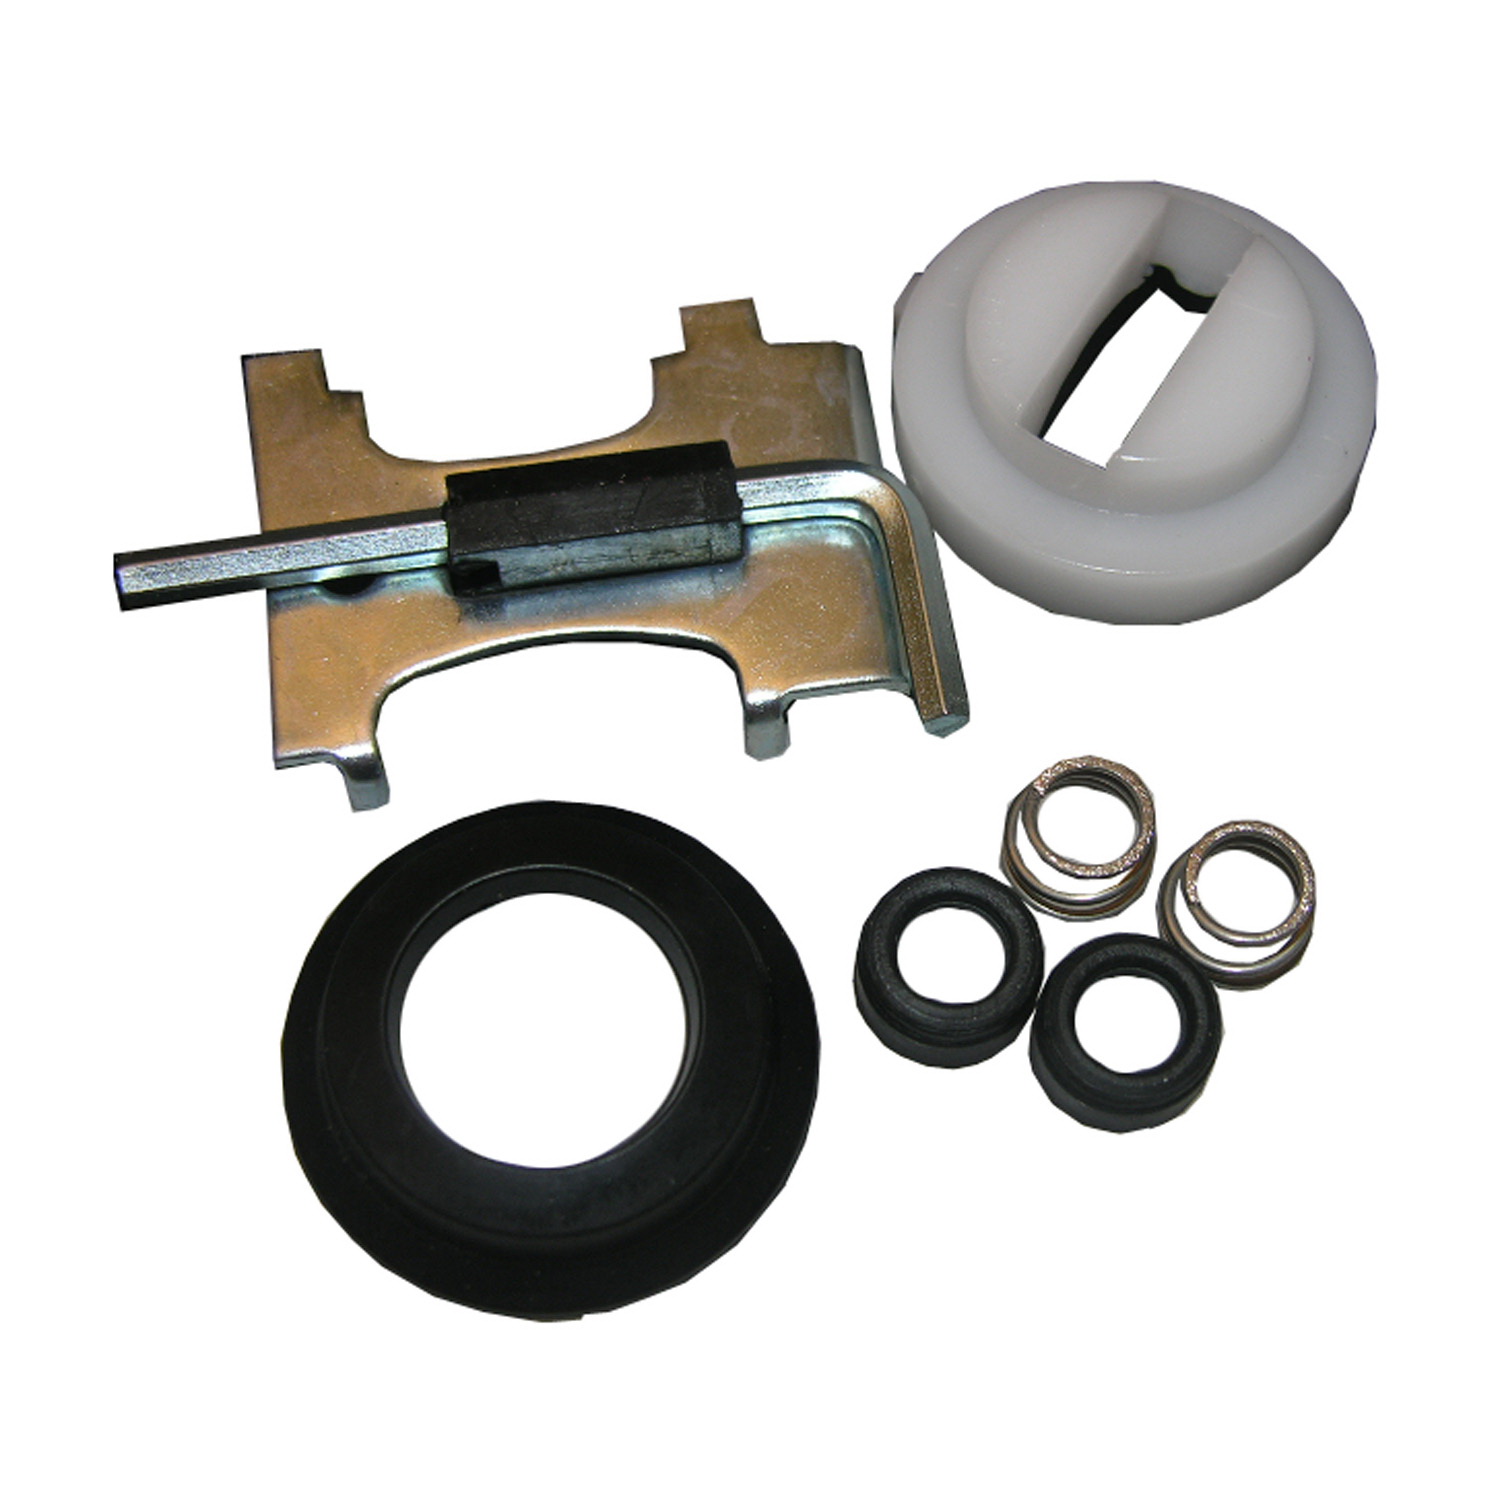 Lasco 0-3005 Faucet Repair Kit, For: Delta/Peerless Plastic Clear Handle Shower, Lavatory